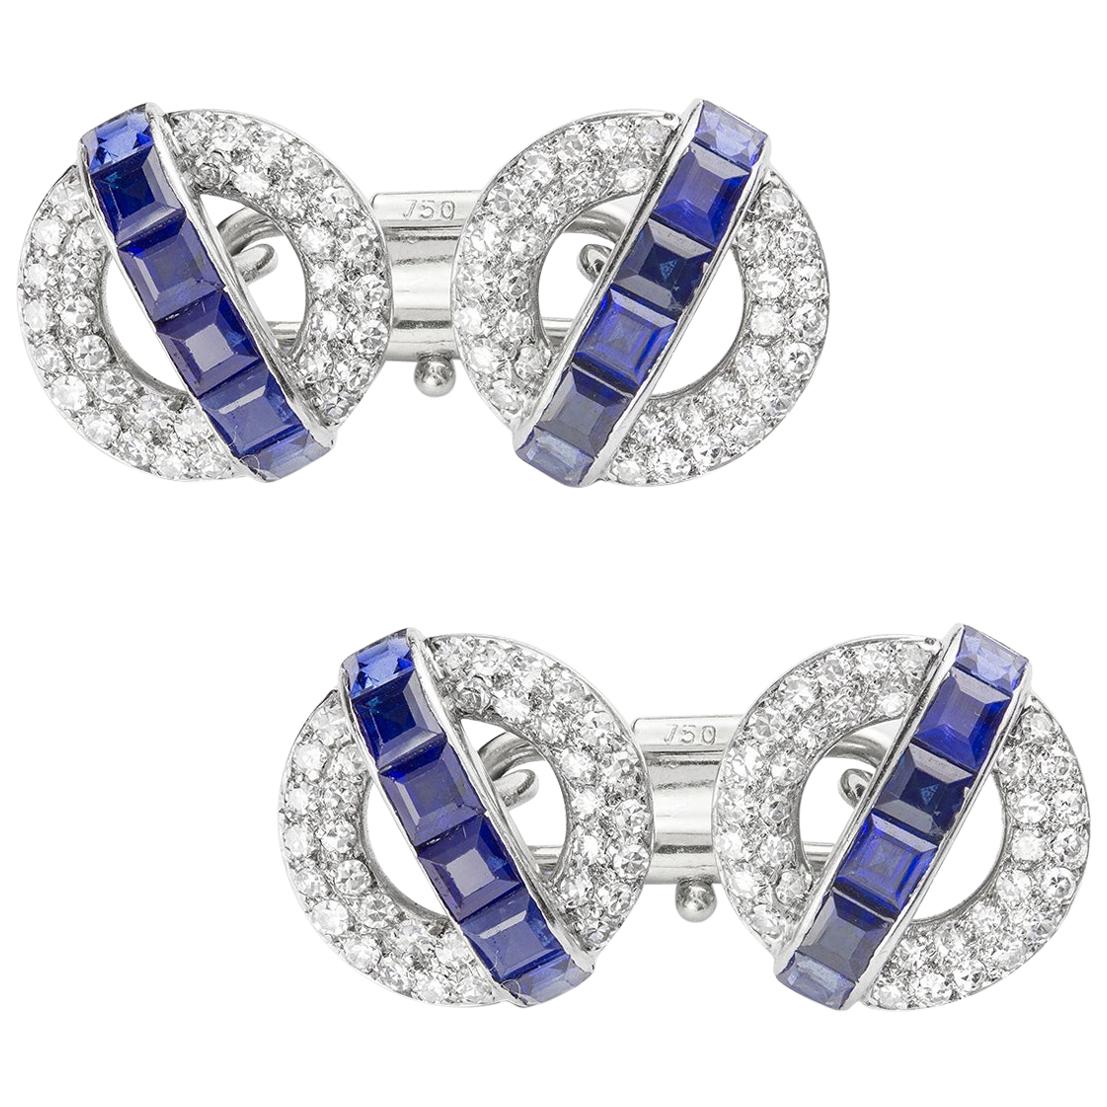 Pair of Mid-20th Century Sapphire and Diamond Cufflinks